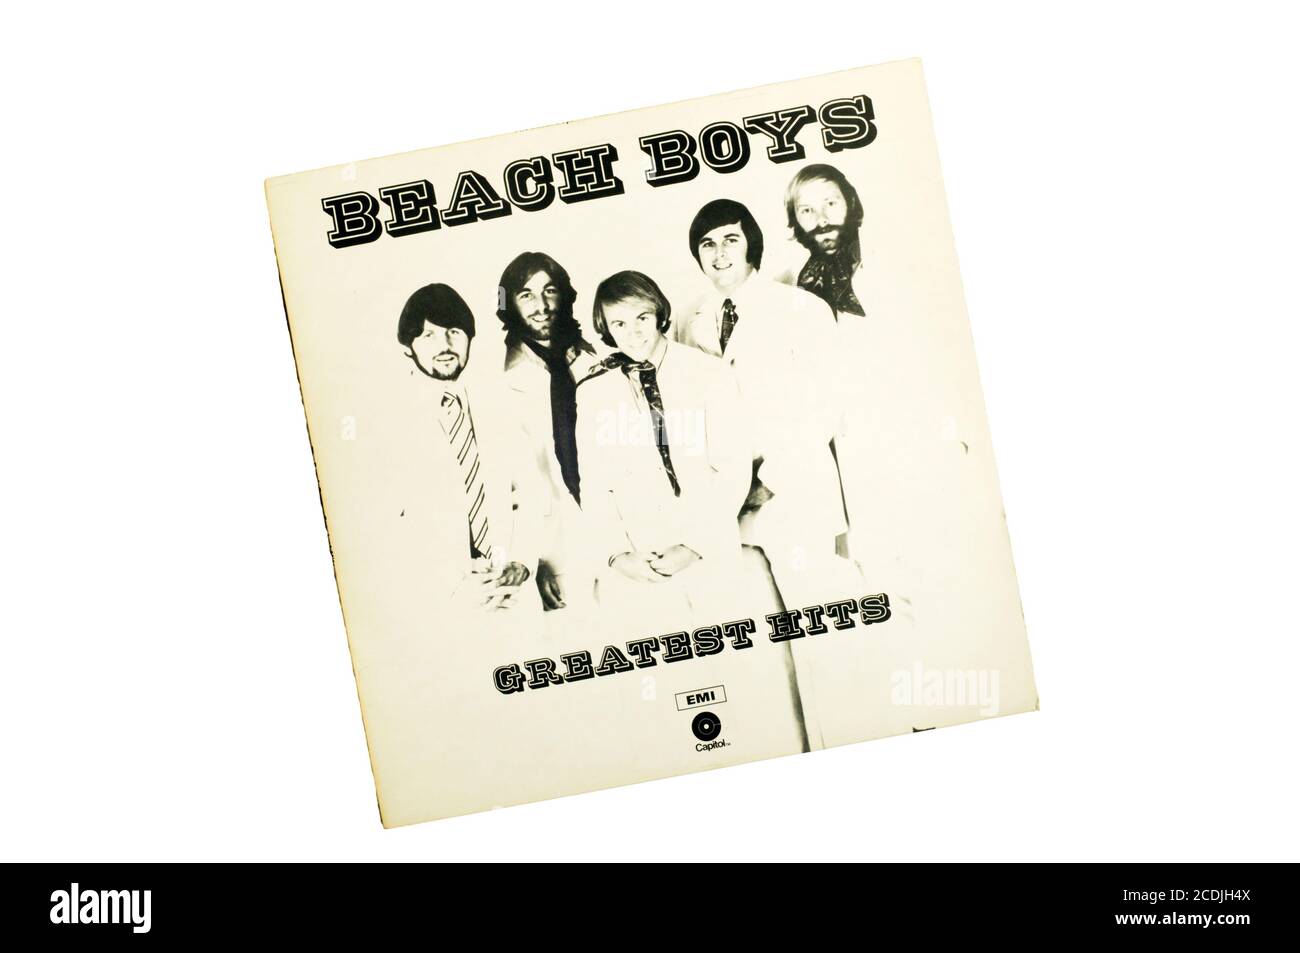 Beach Boys Greatest Hits lanzado en 1970 por EMI. Foto de stock